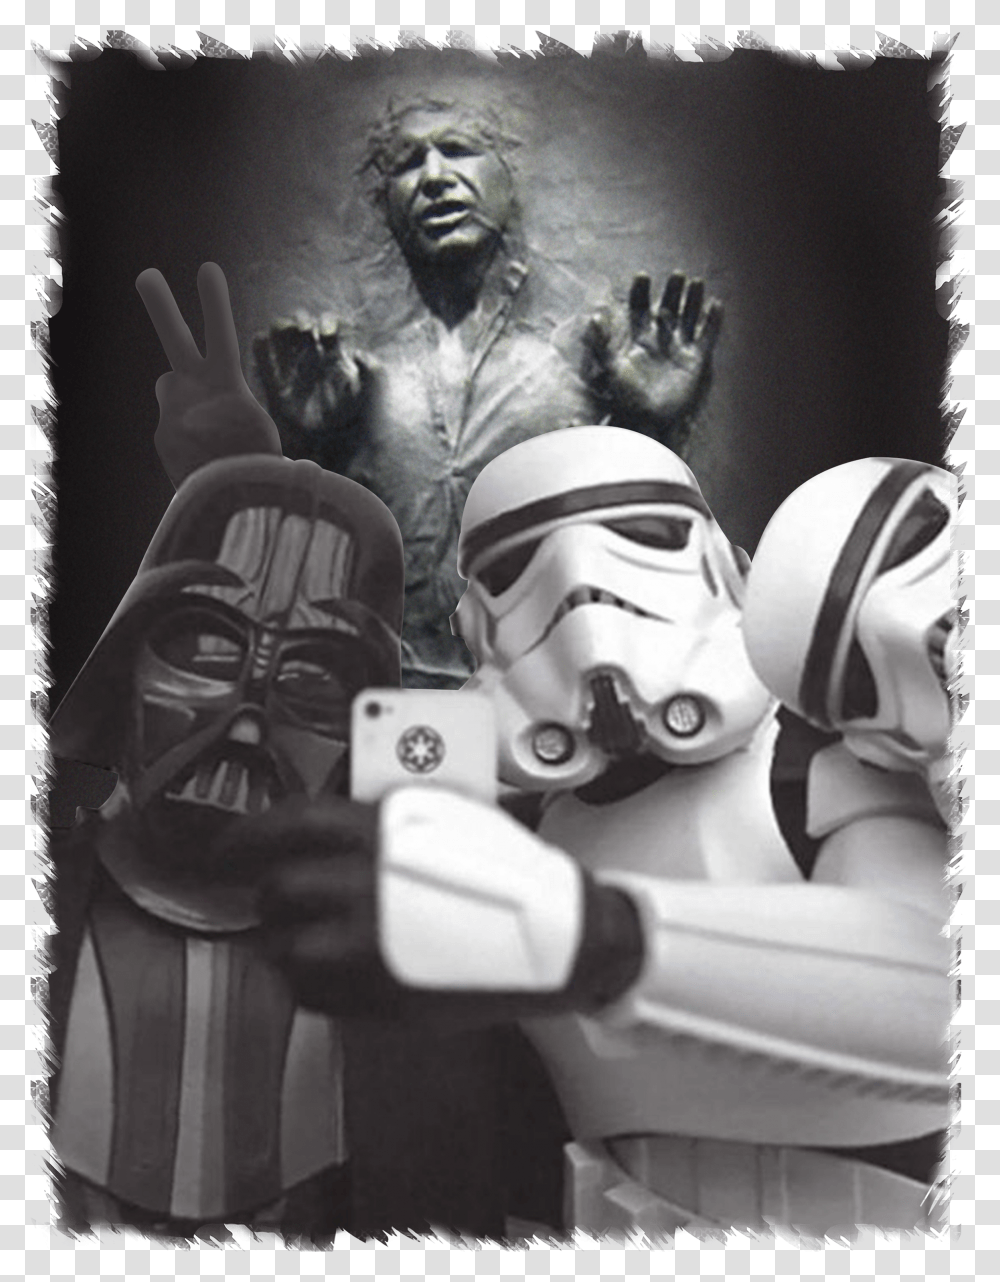 Star Wars Darth Vader And Stormtroopers Selfie In Han Solo Stormtrooper And Darth Vader Shirt Transparent Png